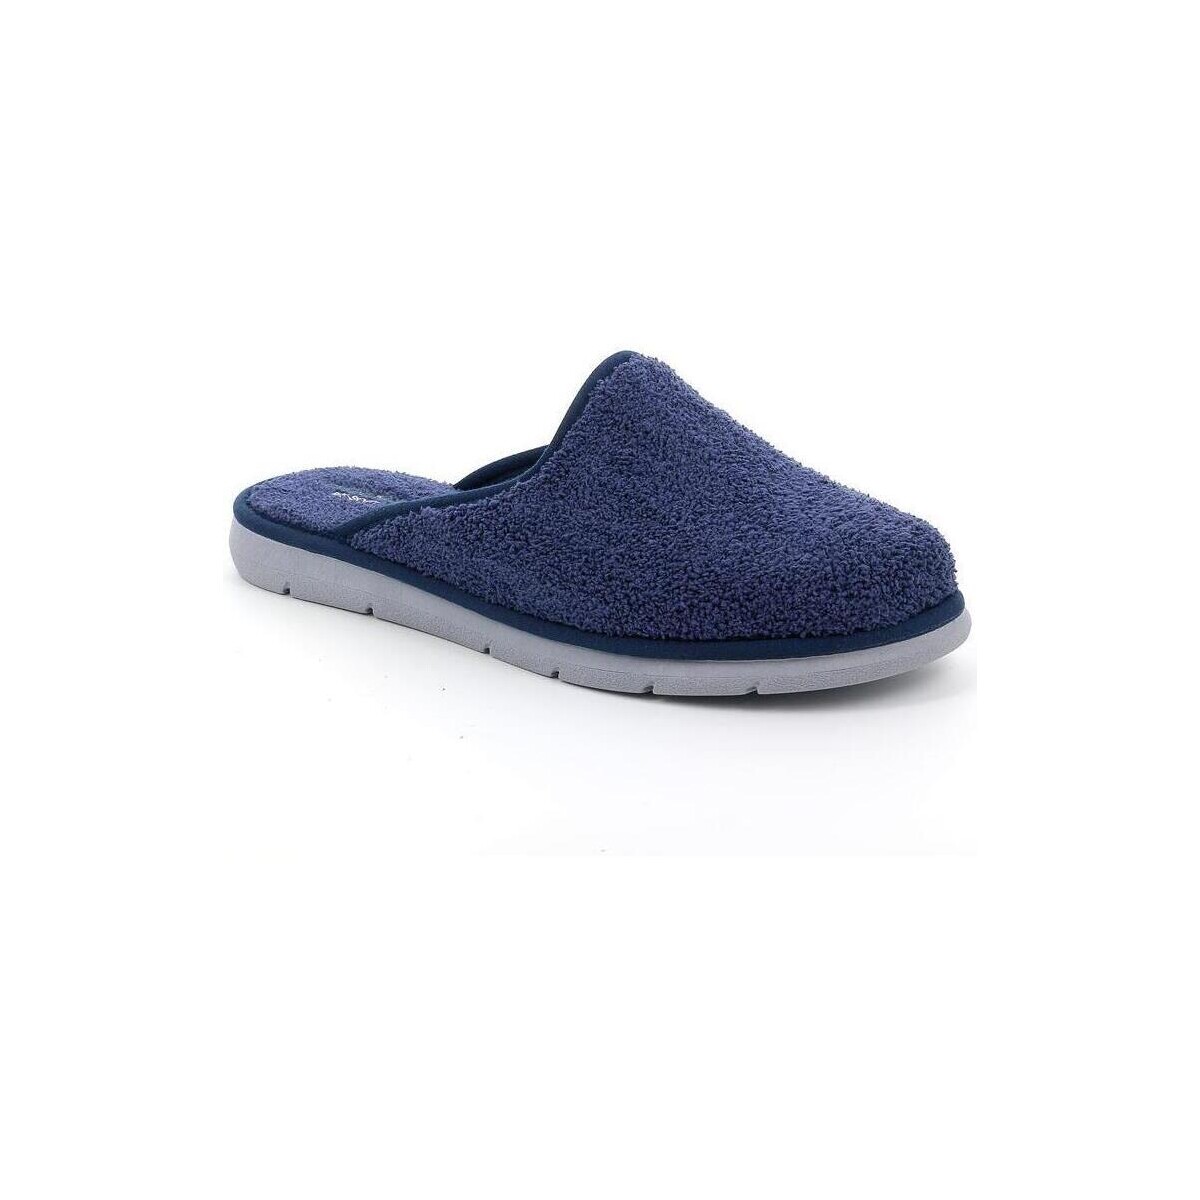 Schoenen Heren Leren slippers Grunland DSG-CI2682 Blauw